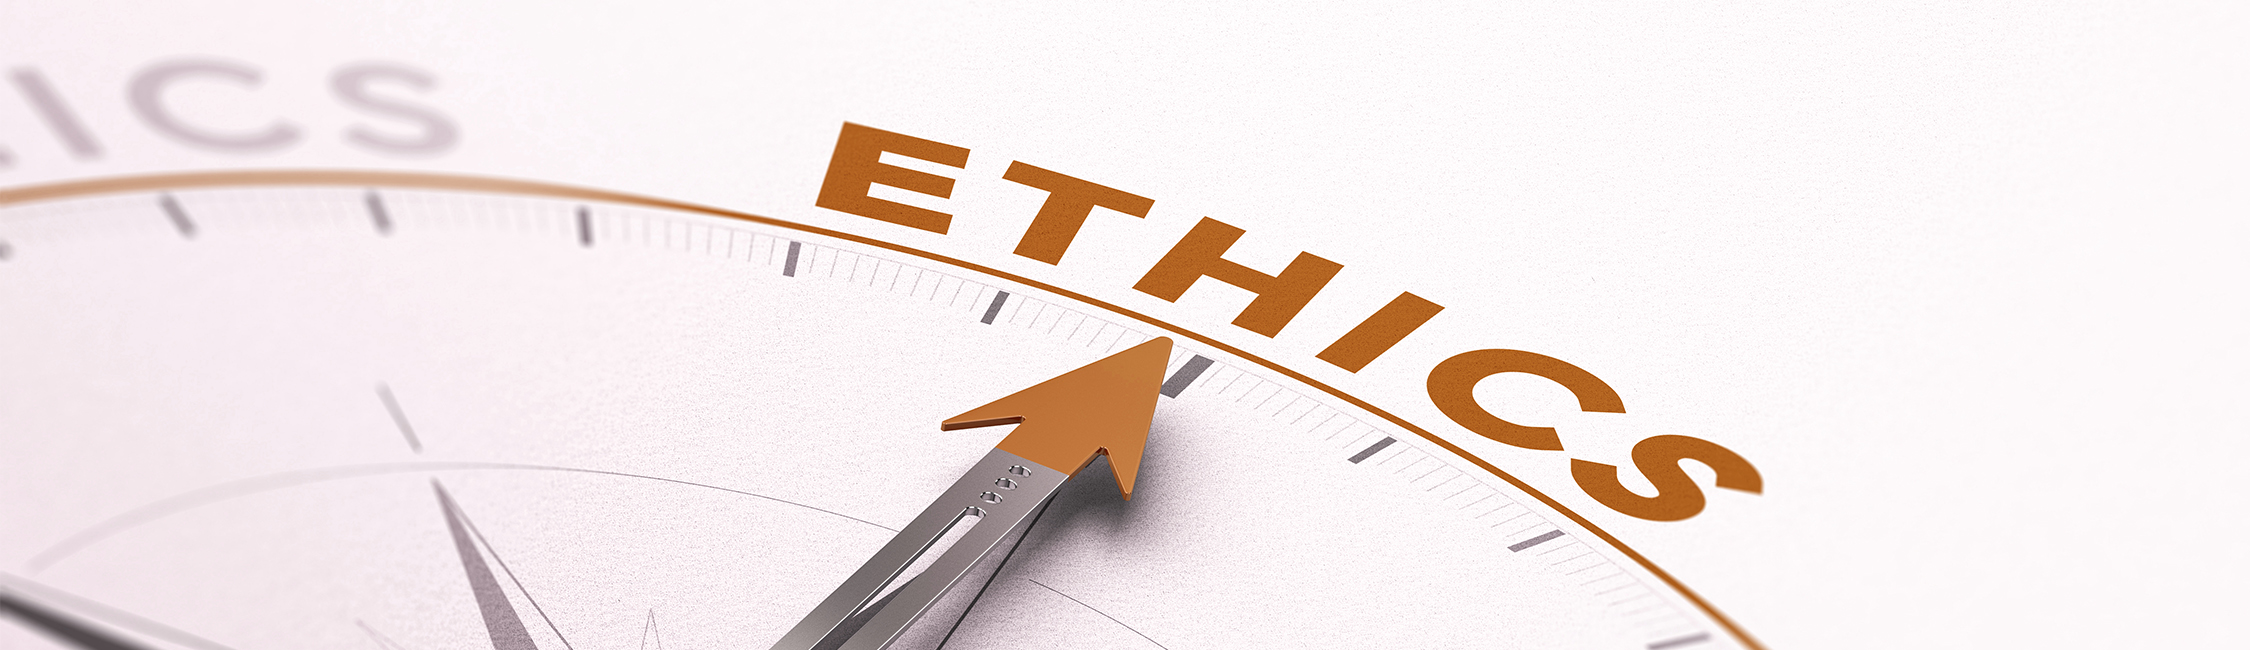 AICPA code of conduct ethics